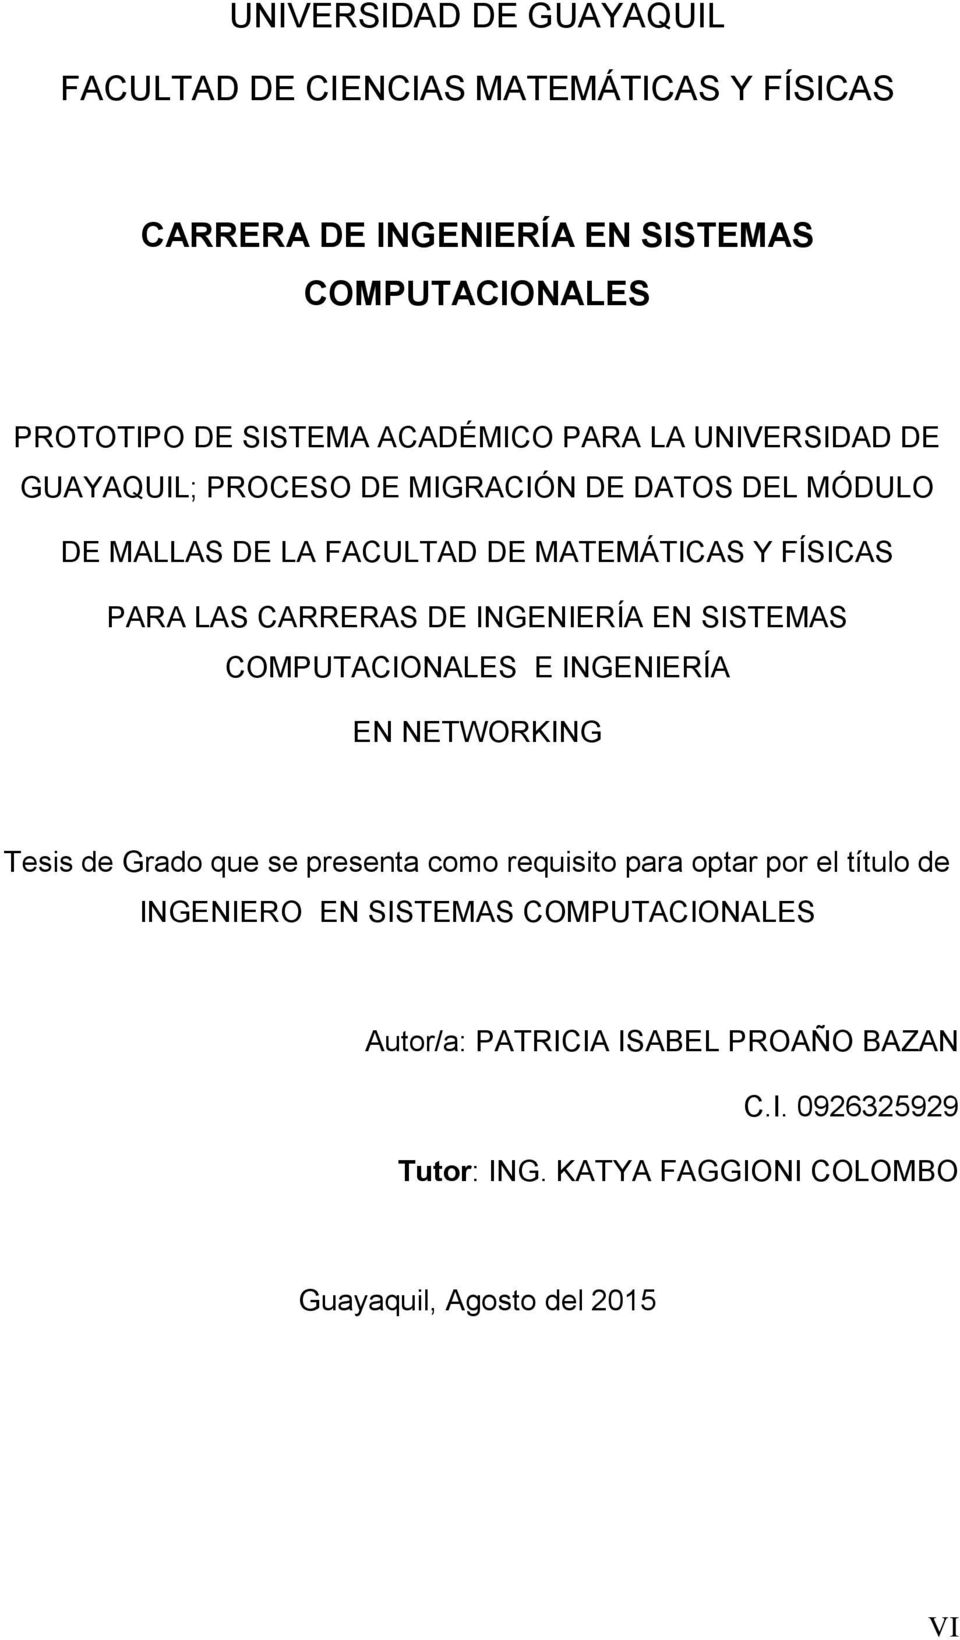 Universidad De Guayaquil Pdf Free Download